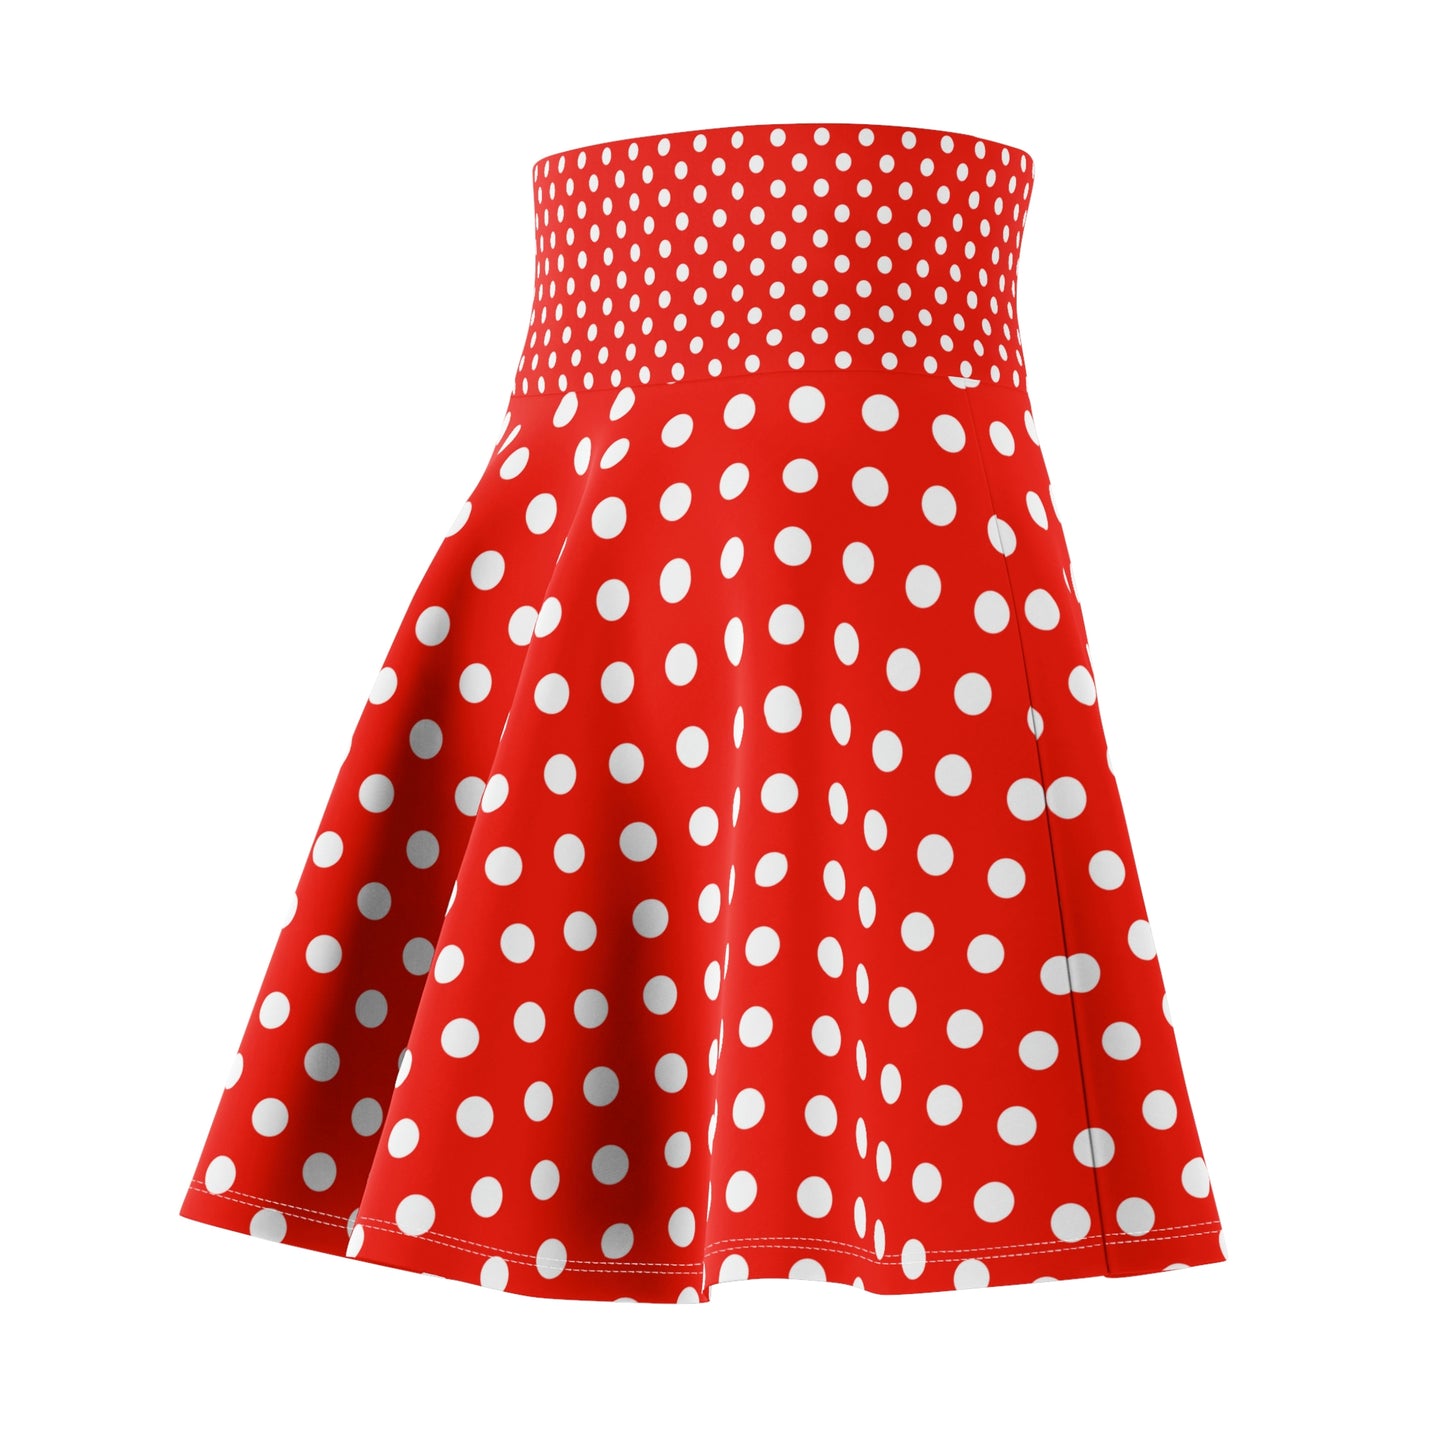 Ruby Delight: Red Skater Skirt with White Polka Dots